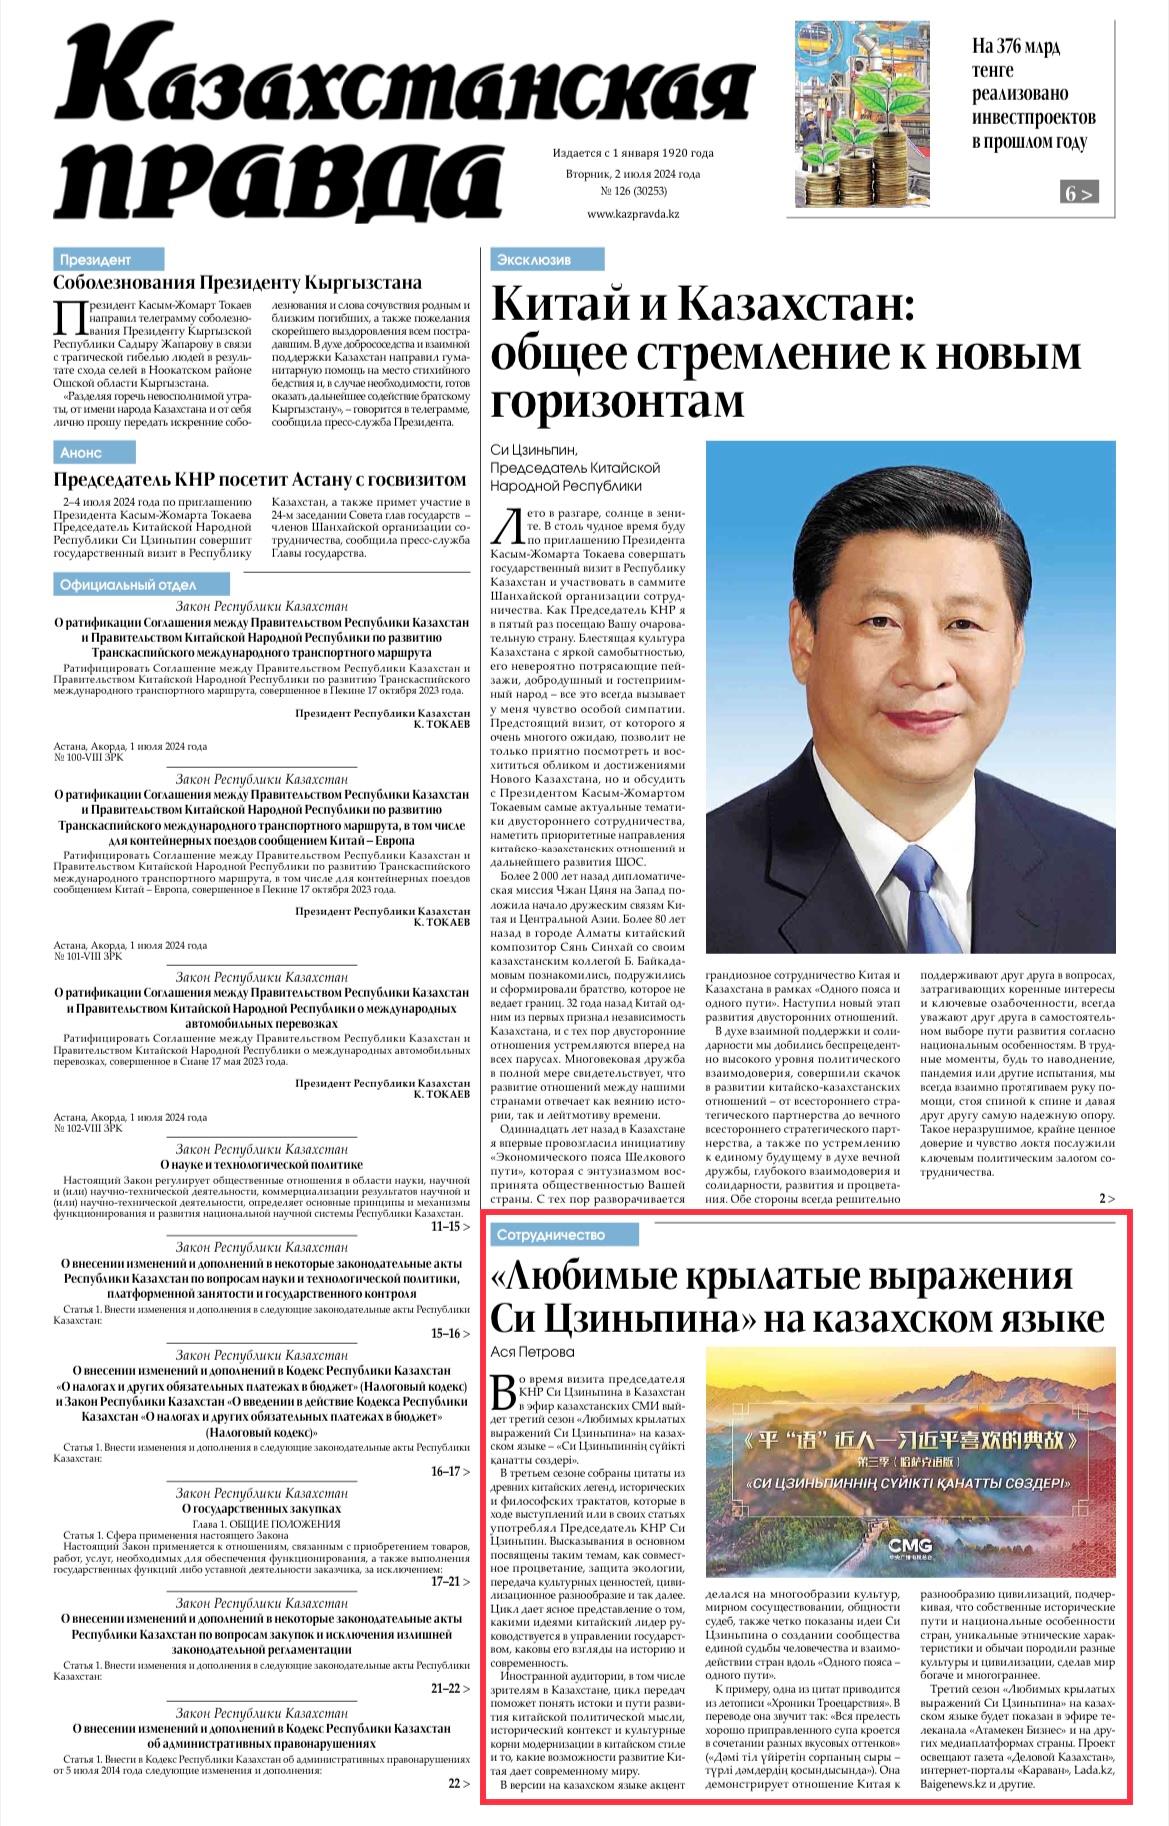 Kazakhstanskaya Pravda newspaper's front-page, July 2, 2024. /CMG